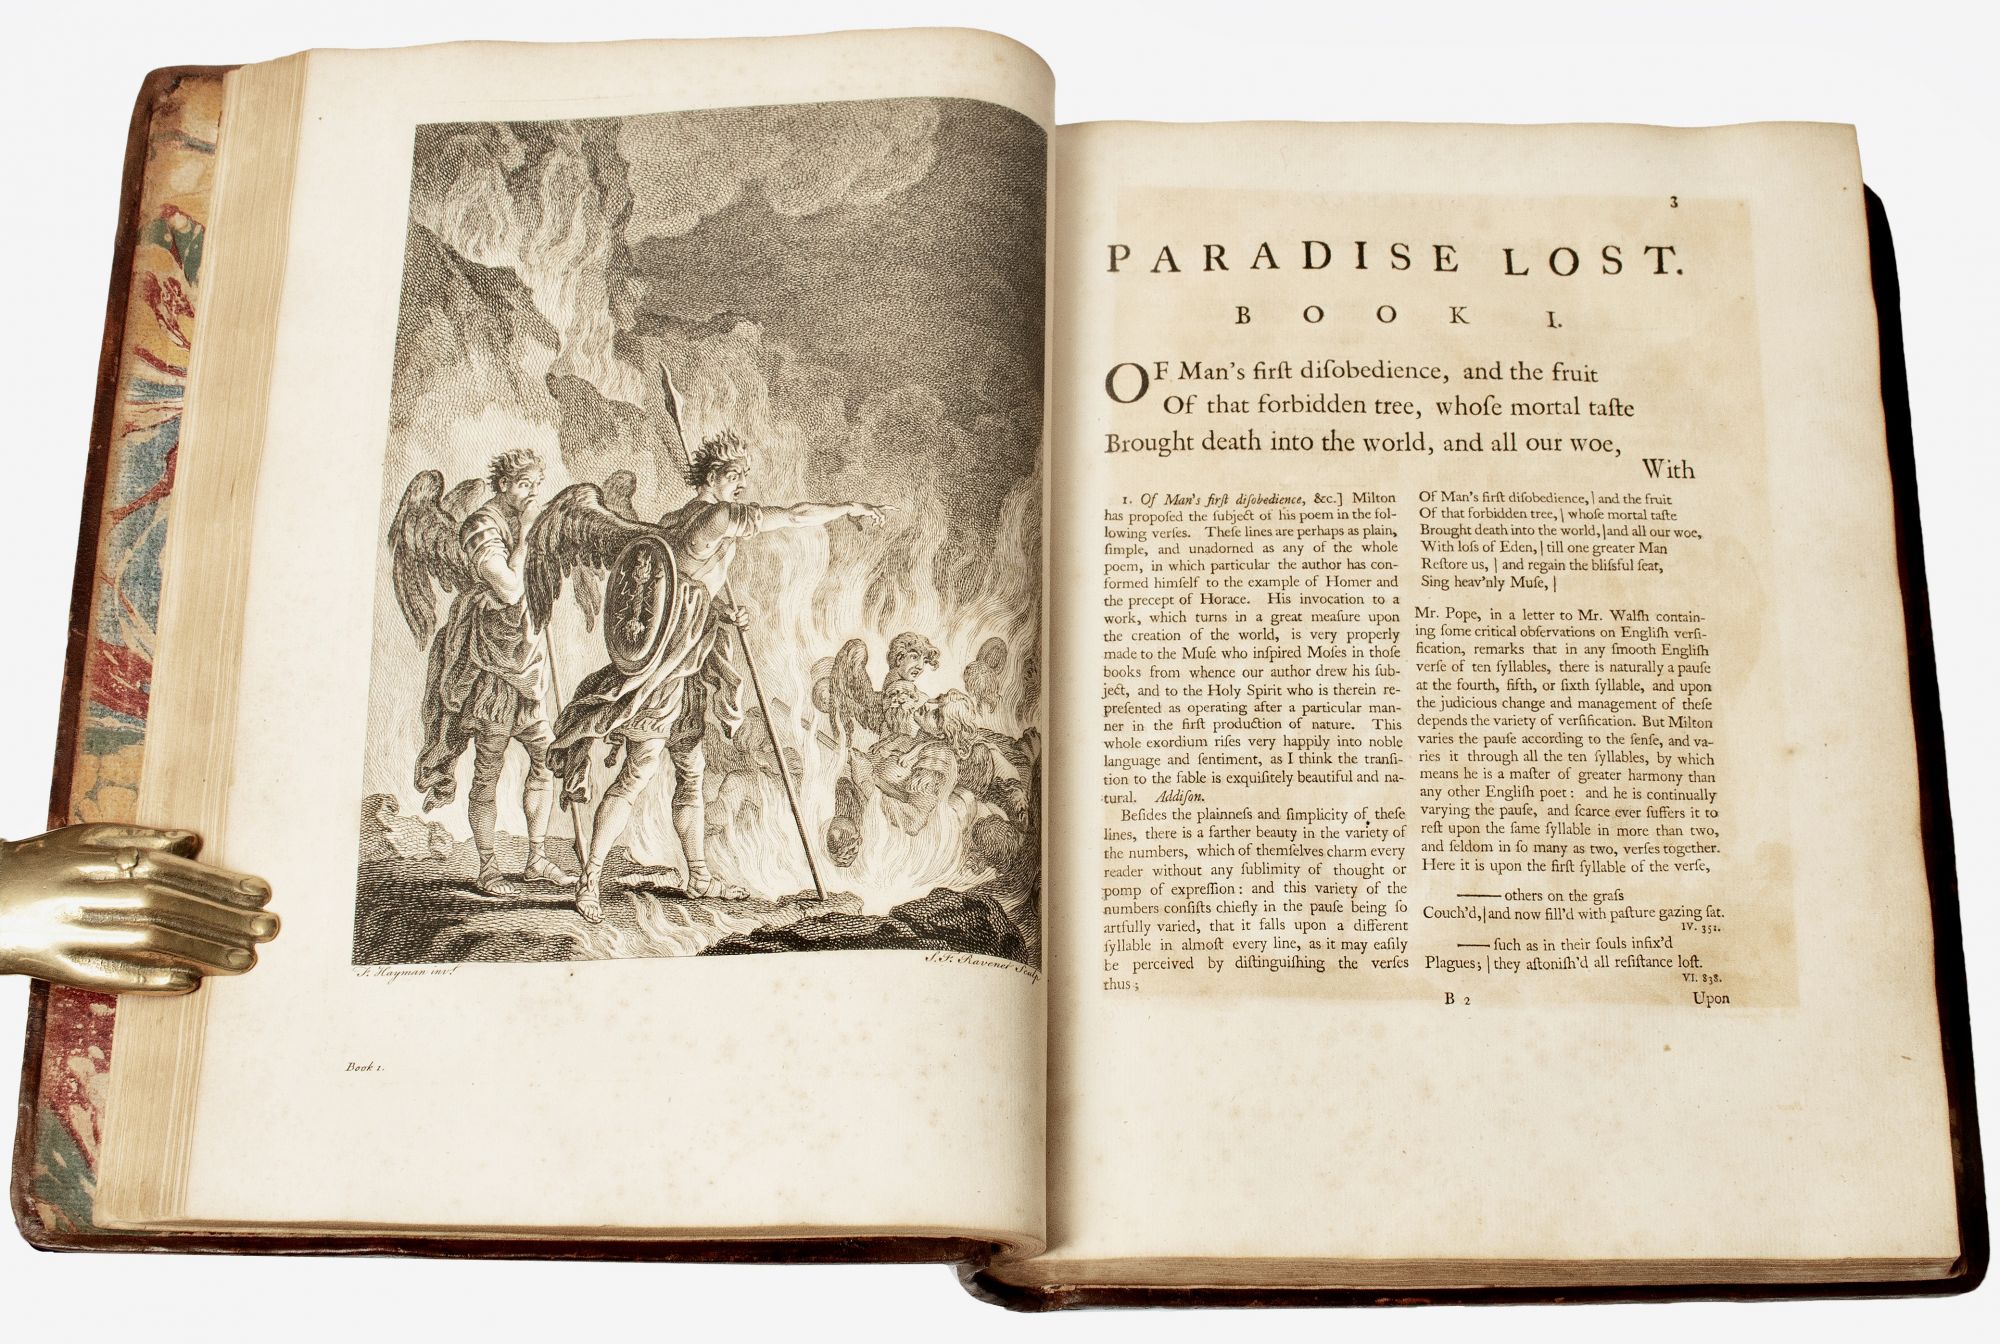 PARADISE LOST by John Milton